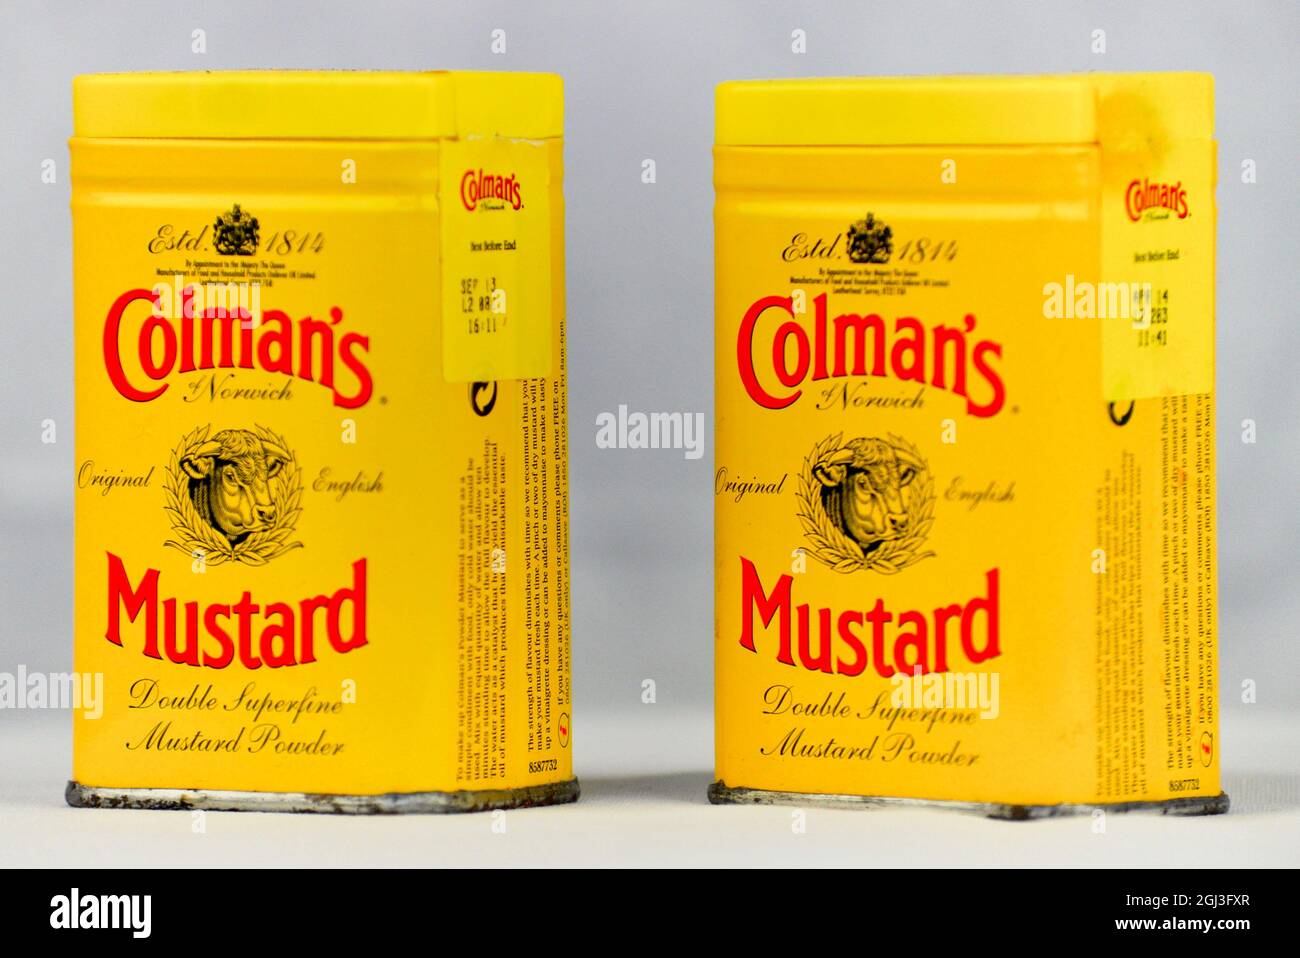 Colman's English Mustard tins arranged on a white background. Stock Photo